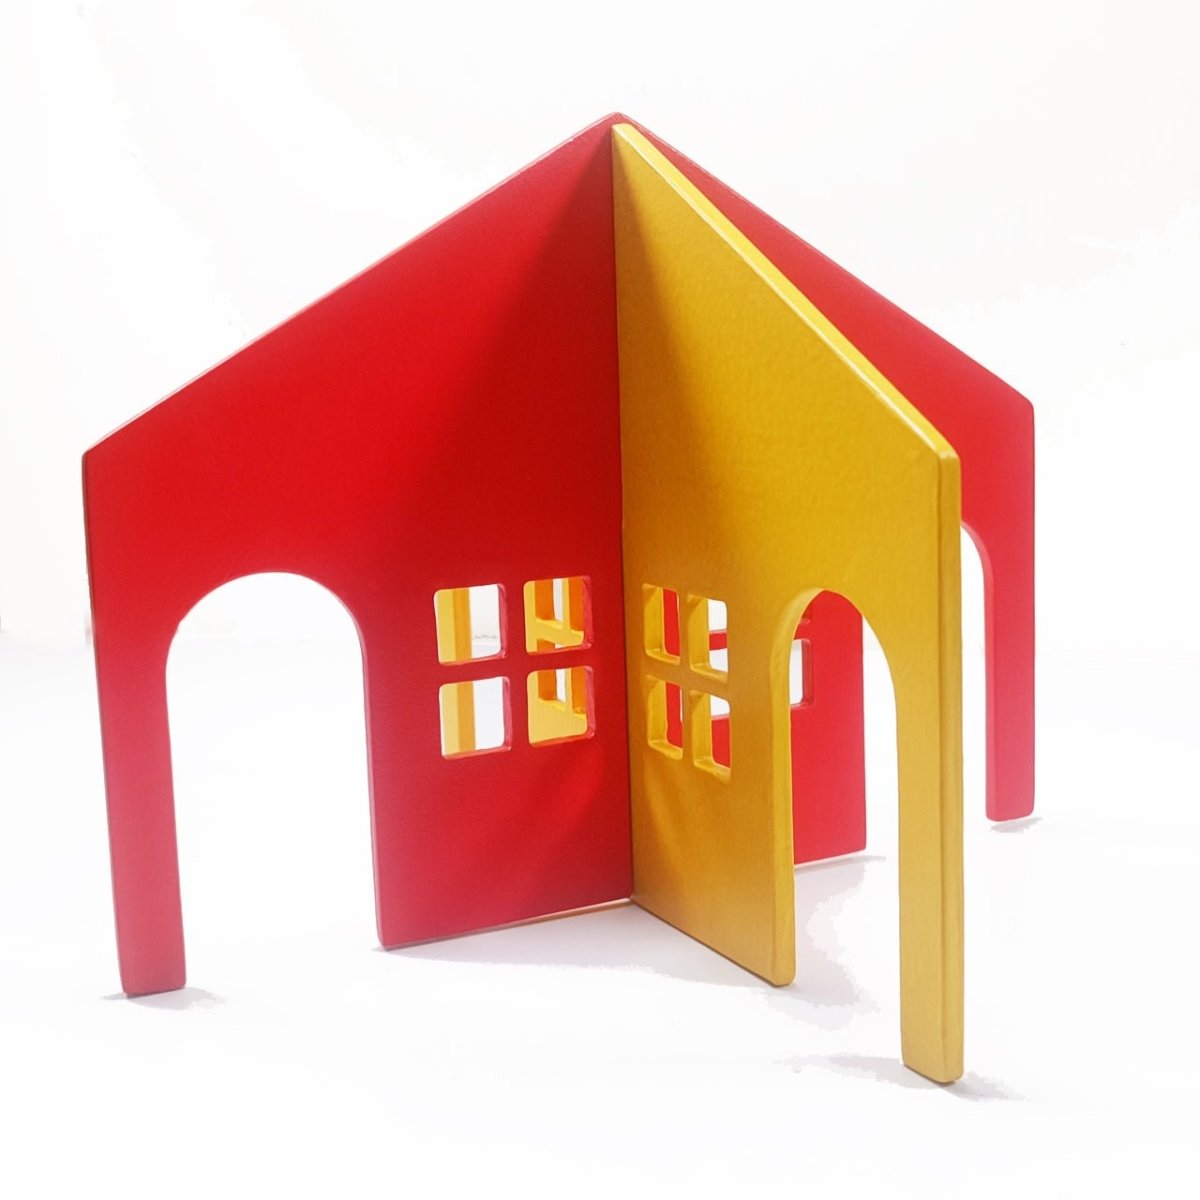 CuddlyCoo Modular Wooden Doll House- Medium - CCMODULARMED